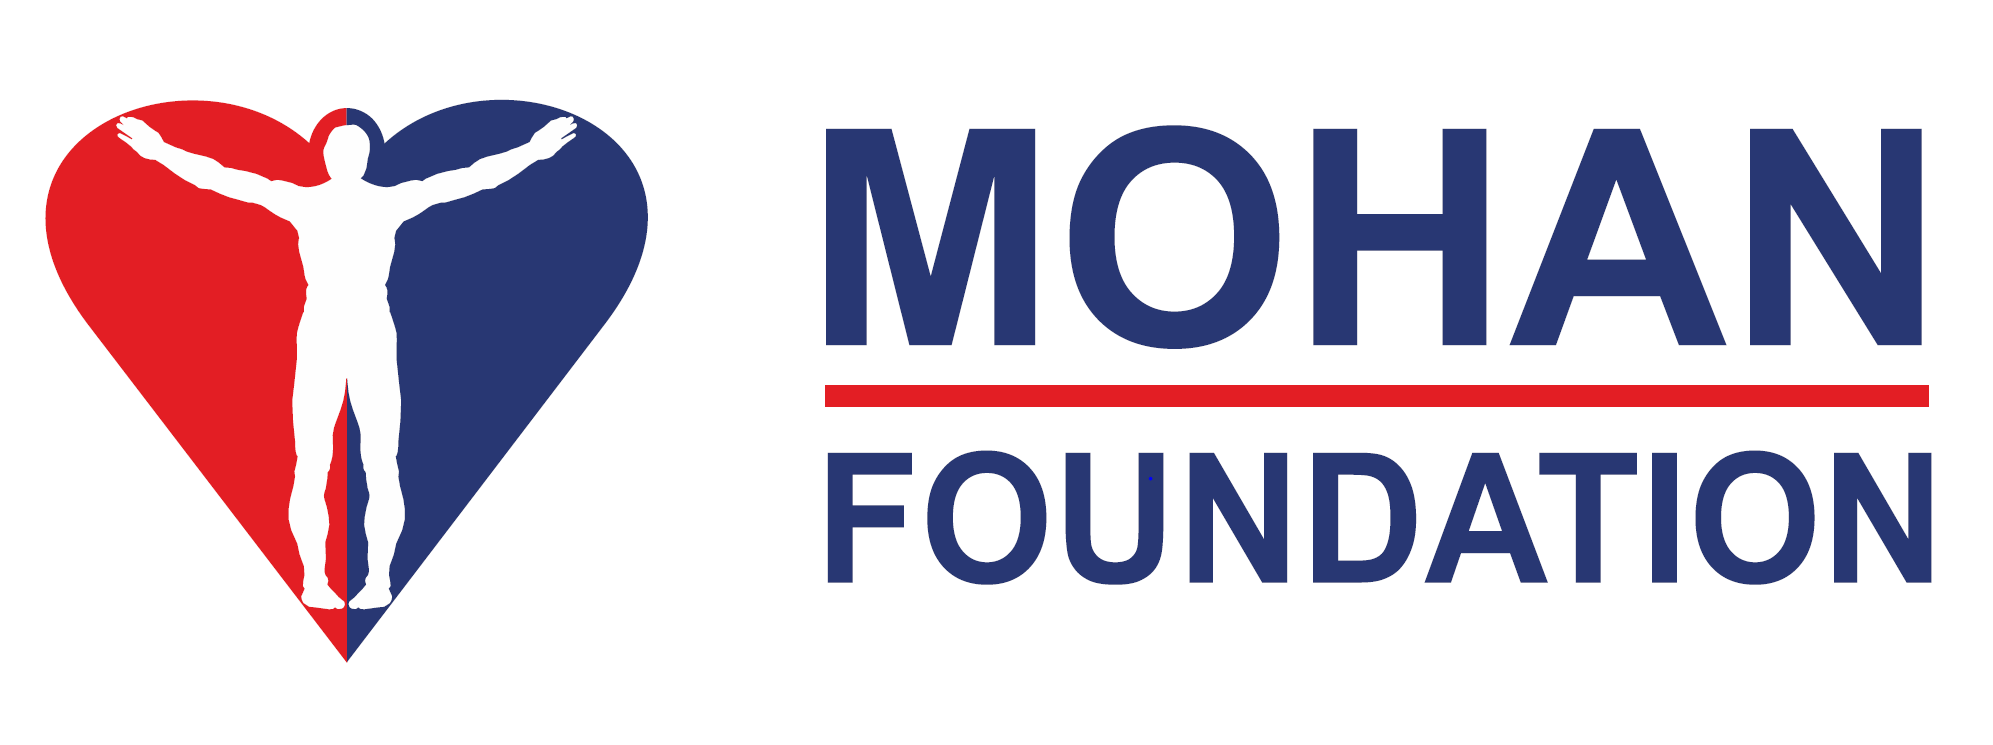 Mohan foundation logo